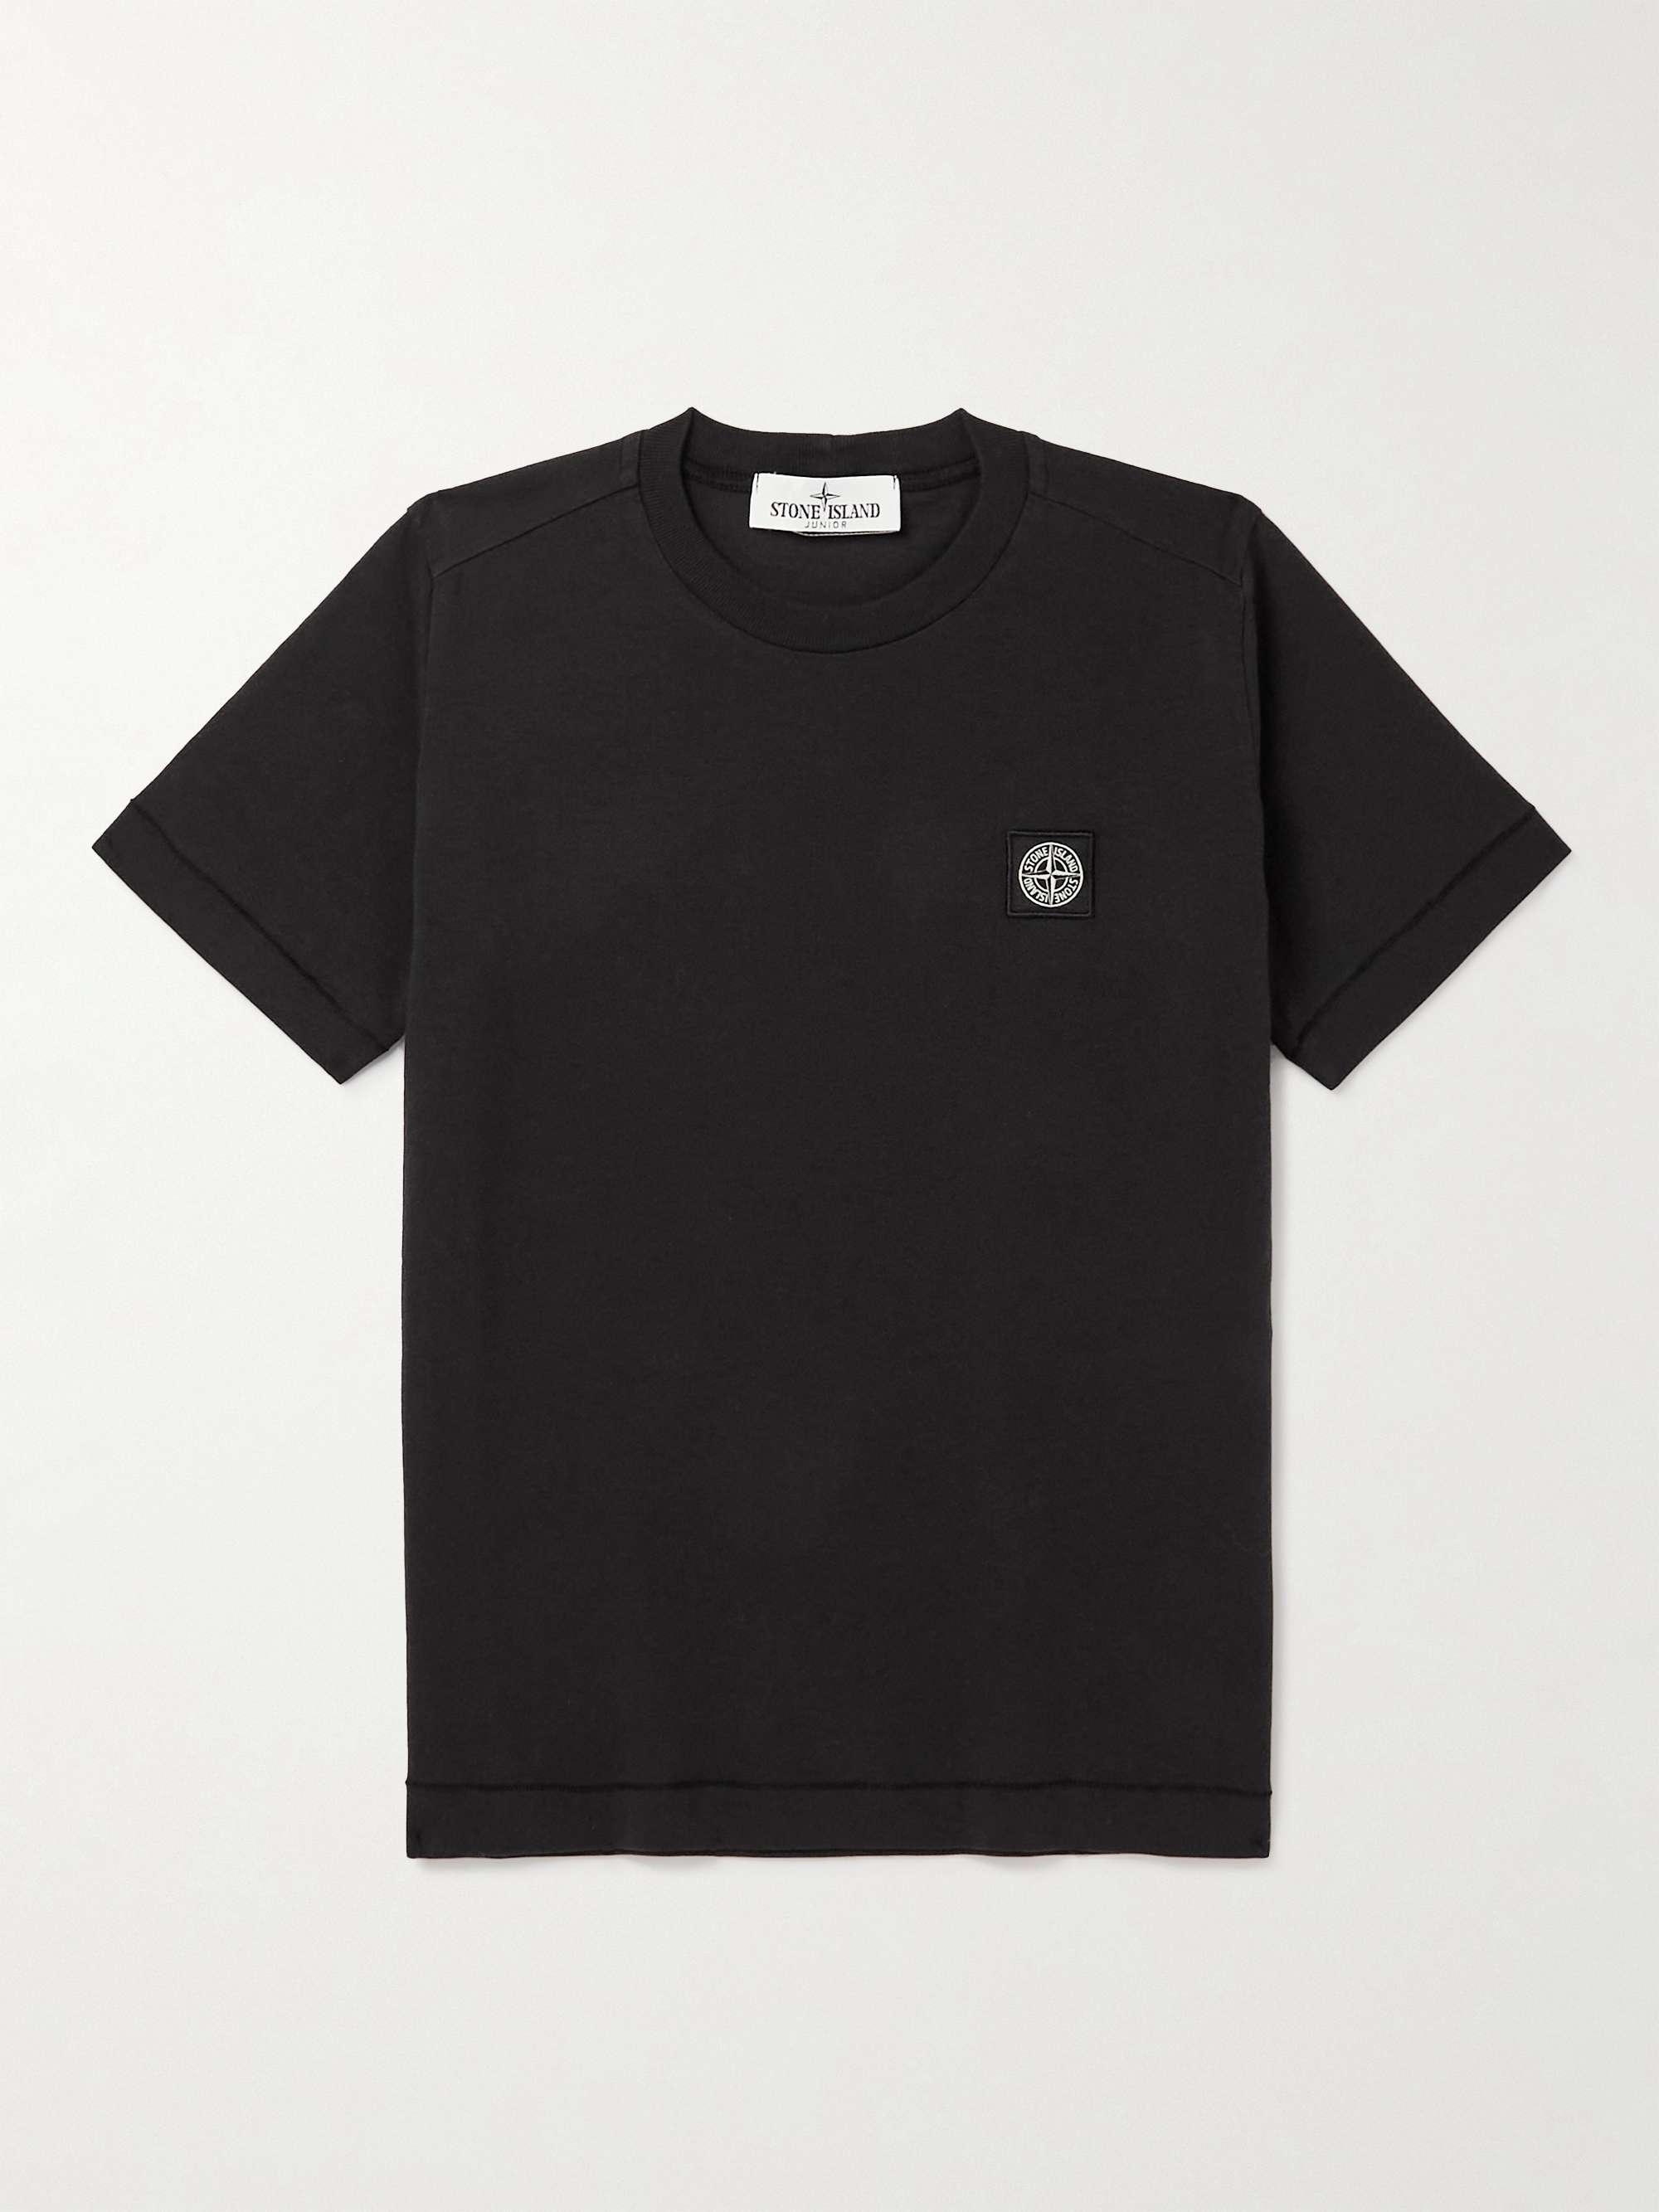 STONE ISLAND JUNIOR Age 14 Logo-Appliquéd Cotton-Jersey T-Shirt | MR PORTER